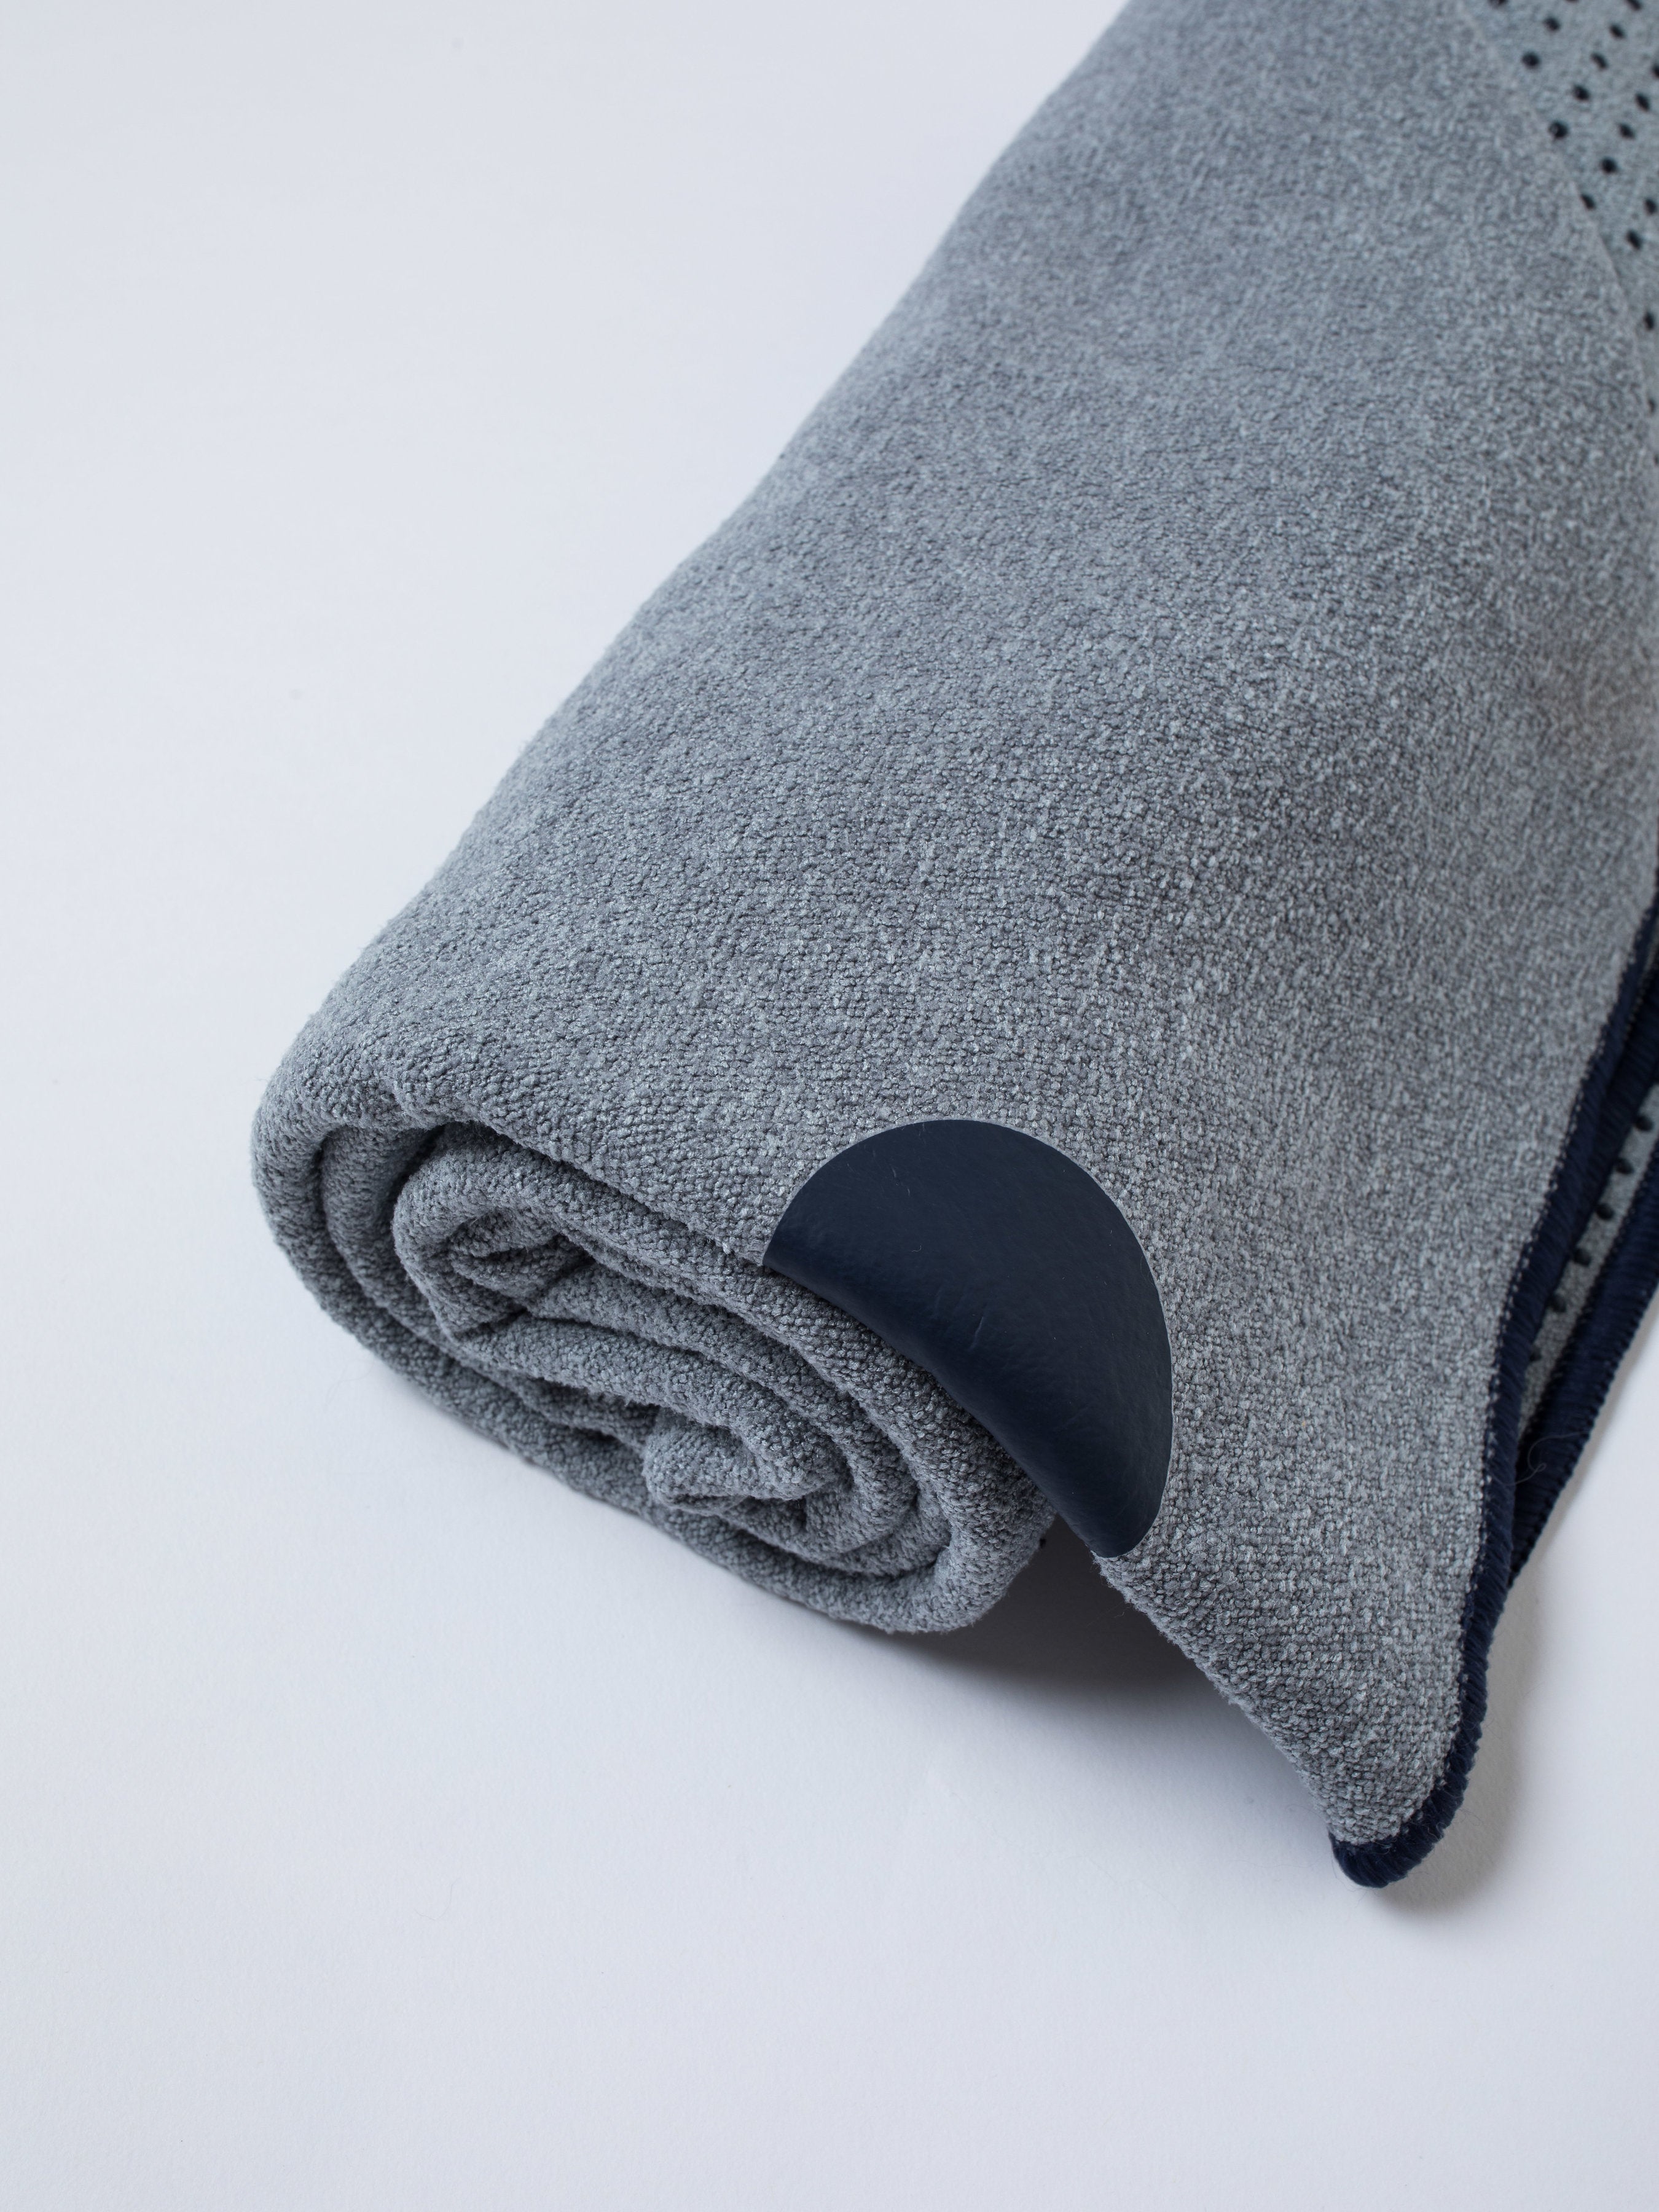 Manduka Equa® Mat Towel Standard - Haze - eQua - YOGA TOWELS